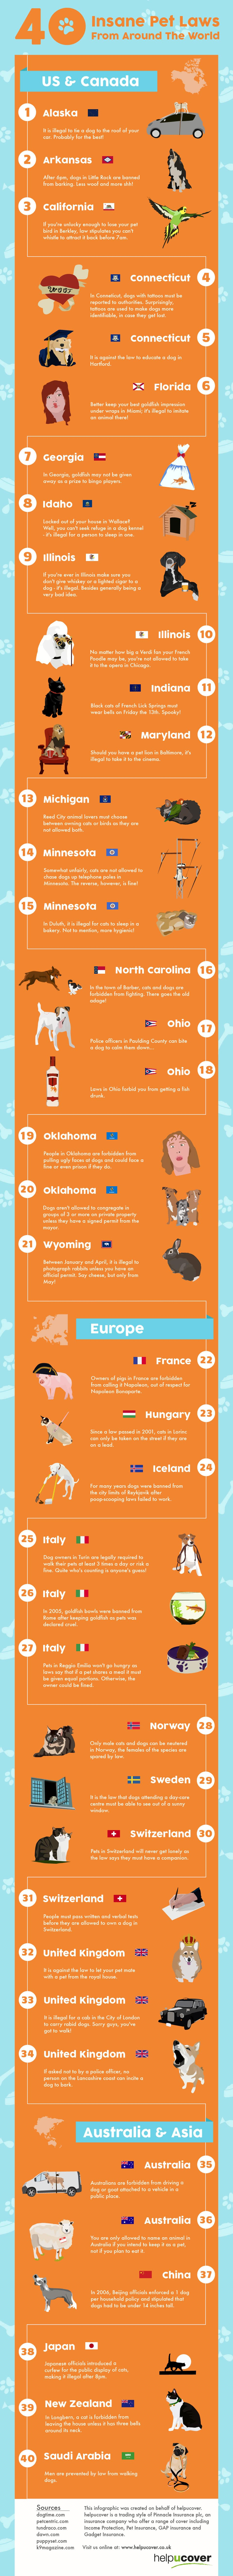 Strangest 40 Pet Laws Infographic